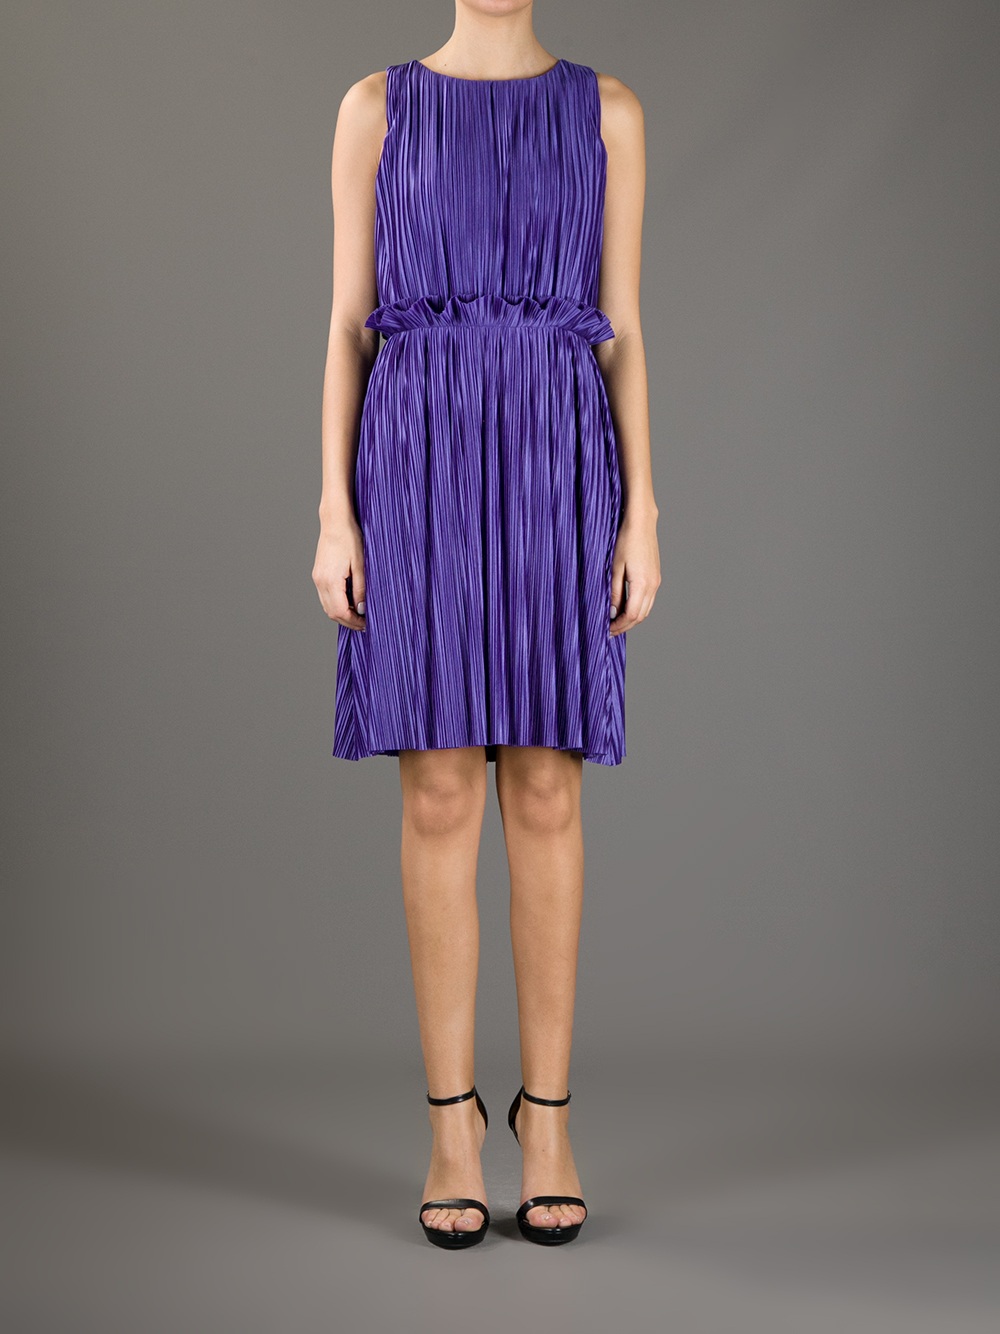 Lyst - Love Moschino Crepe Dress in Purple